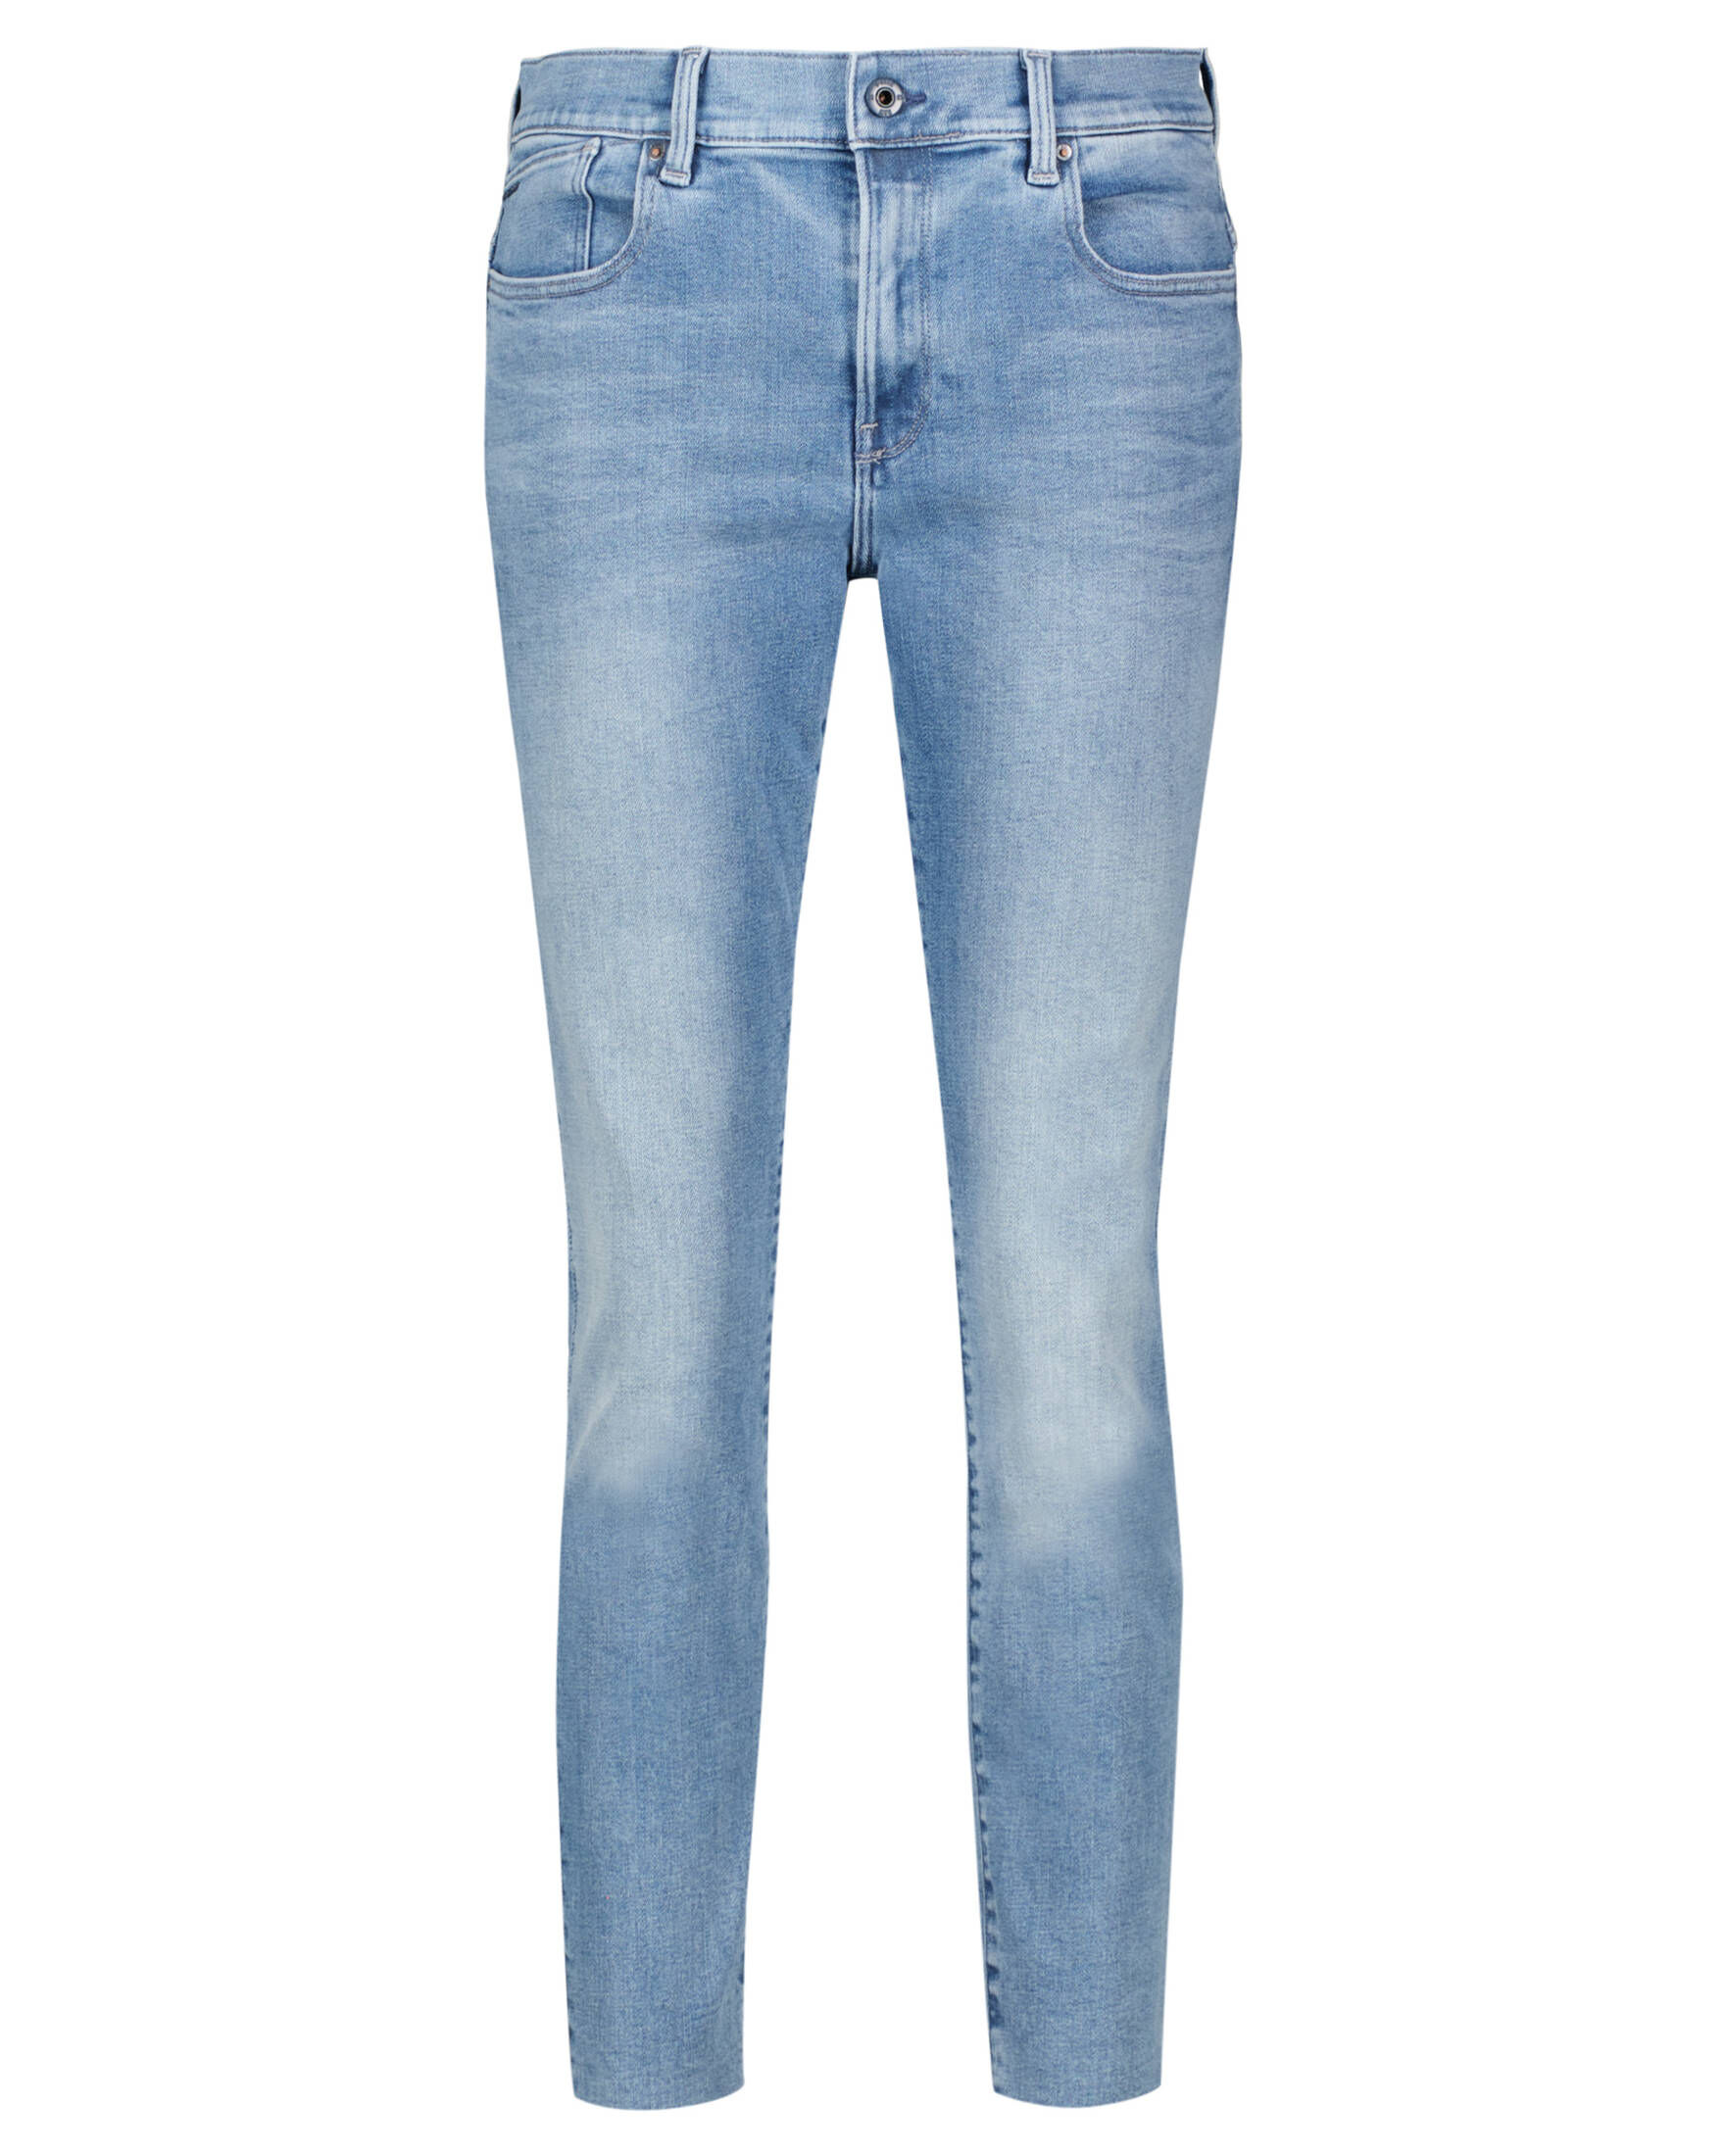 G-Star RAW Damen Jeans LHANA kaufen Skinny engelhorn | Fit